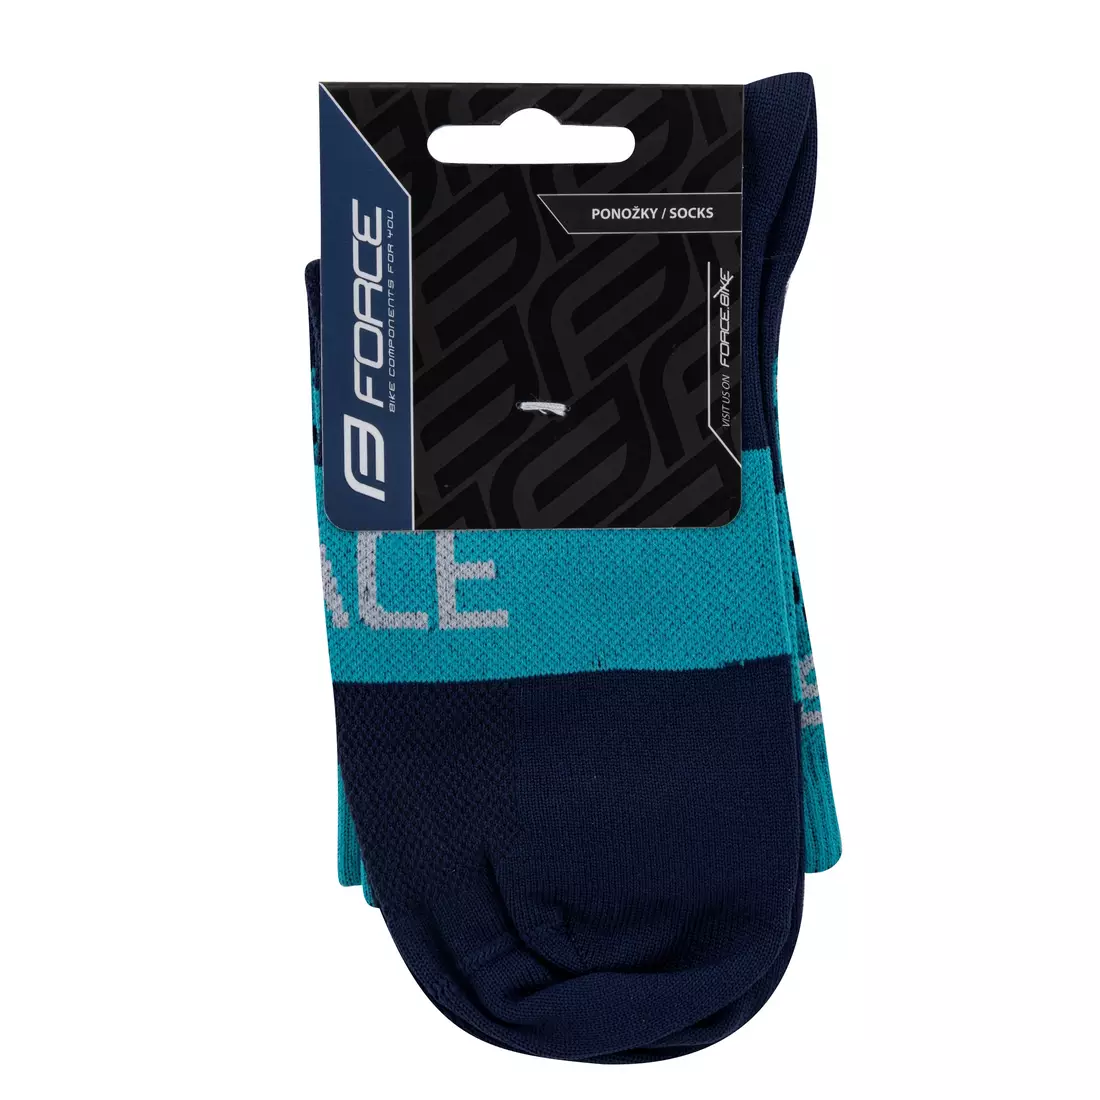 FORCE Cycling socks / sport socks TRACE, blue, 900892